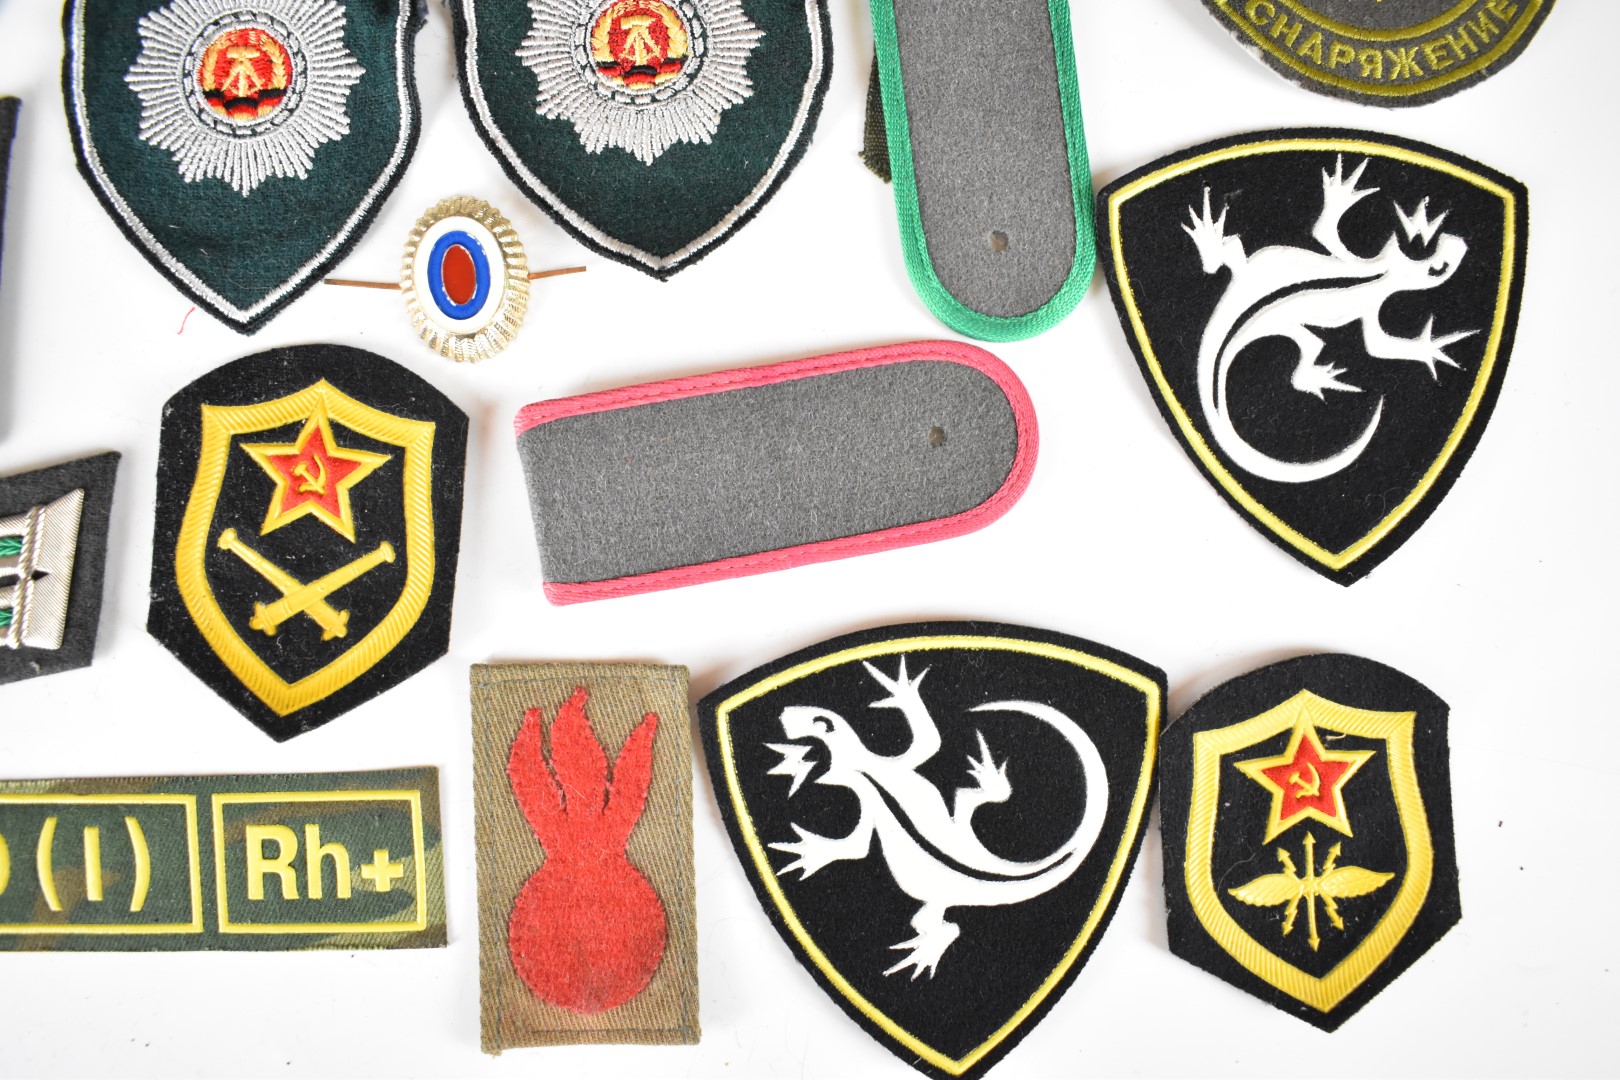 Russian / East German cloth badges, rank insignia etc - Image 4 of 6